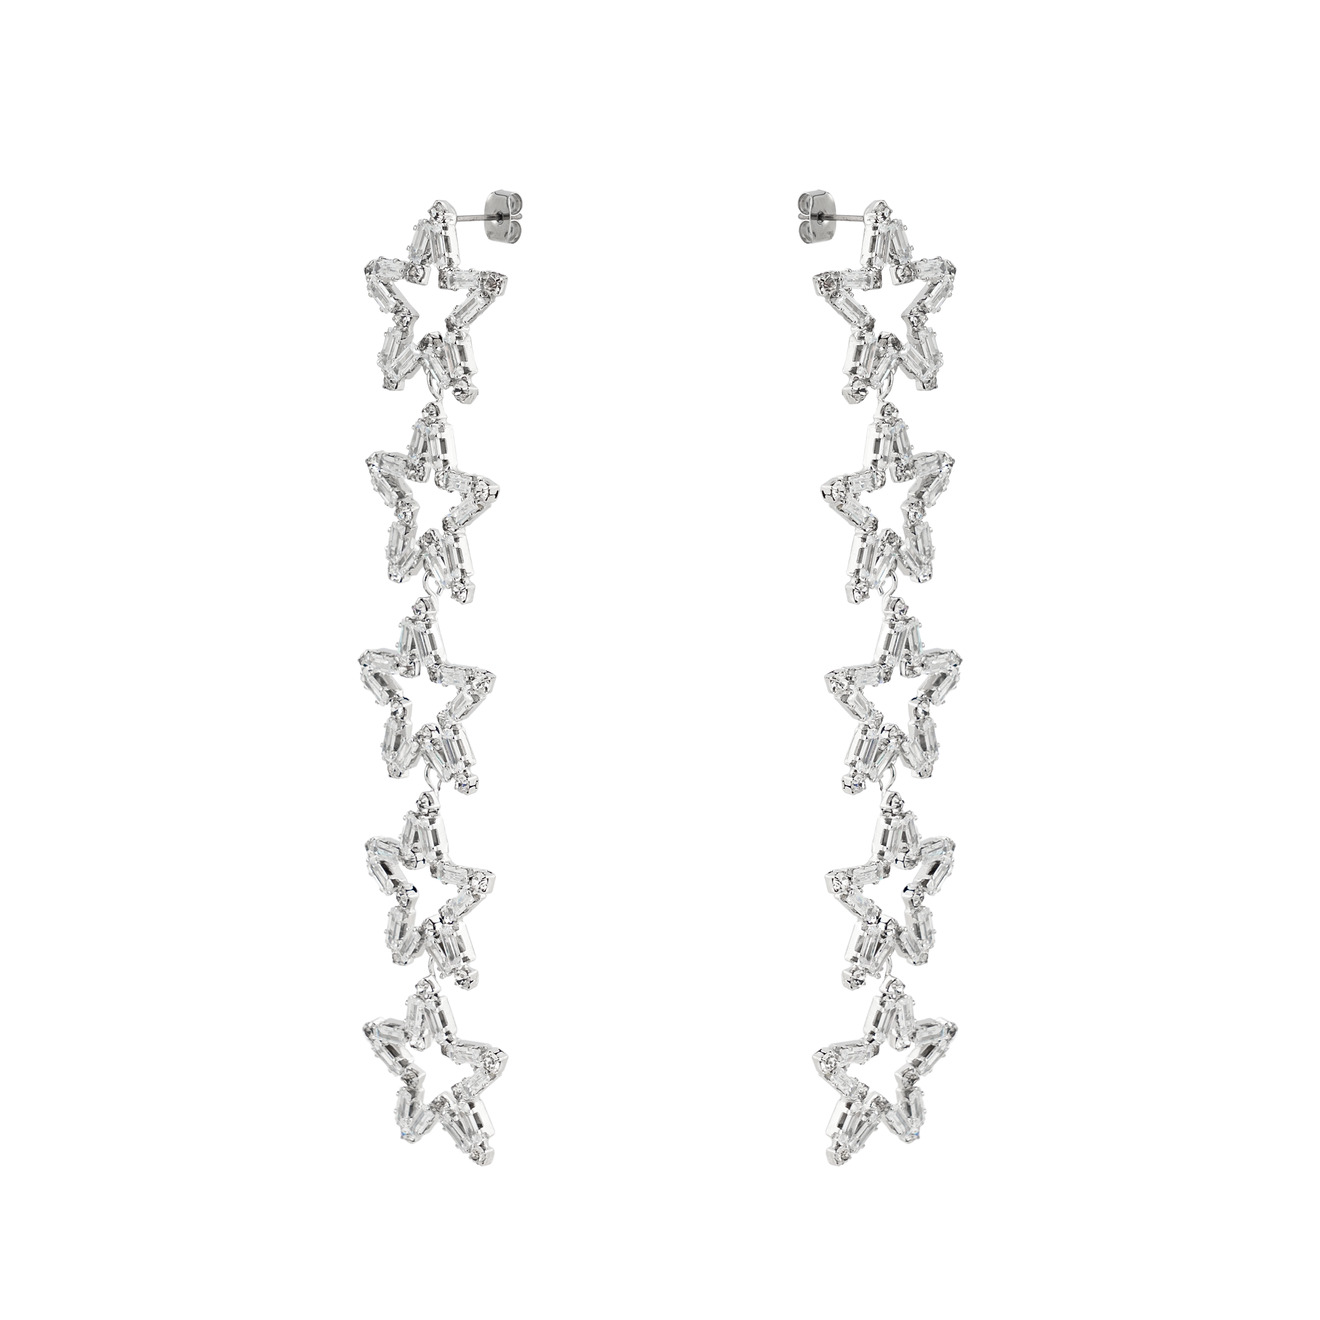 Herald Percy Серебристые серьги-дорожки из звезд с кристаллами herald percy серебристые серьги хупы с дорожкой из белых кристаллов